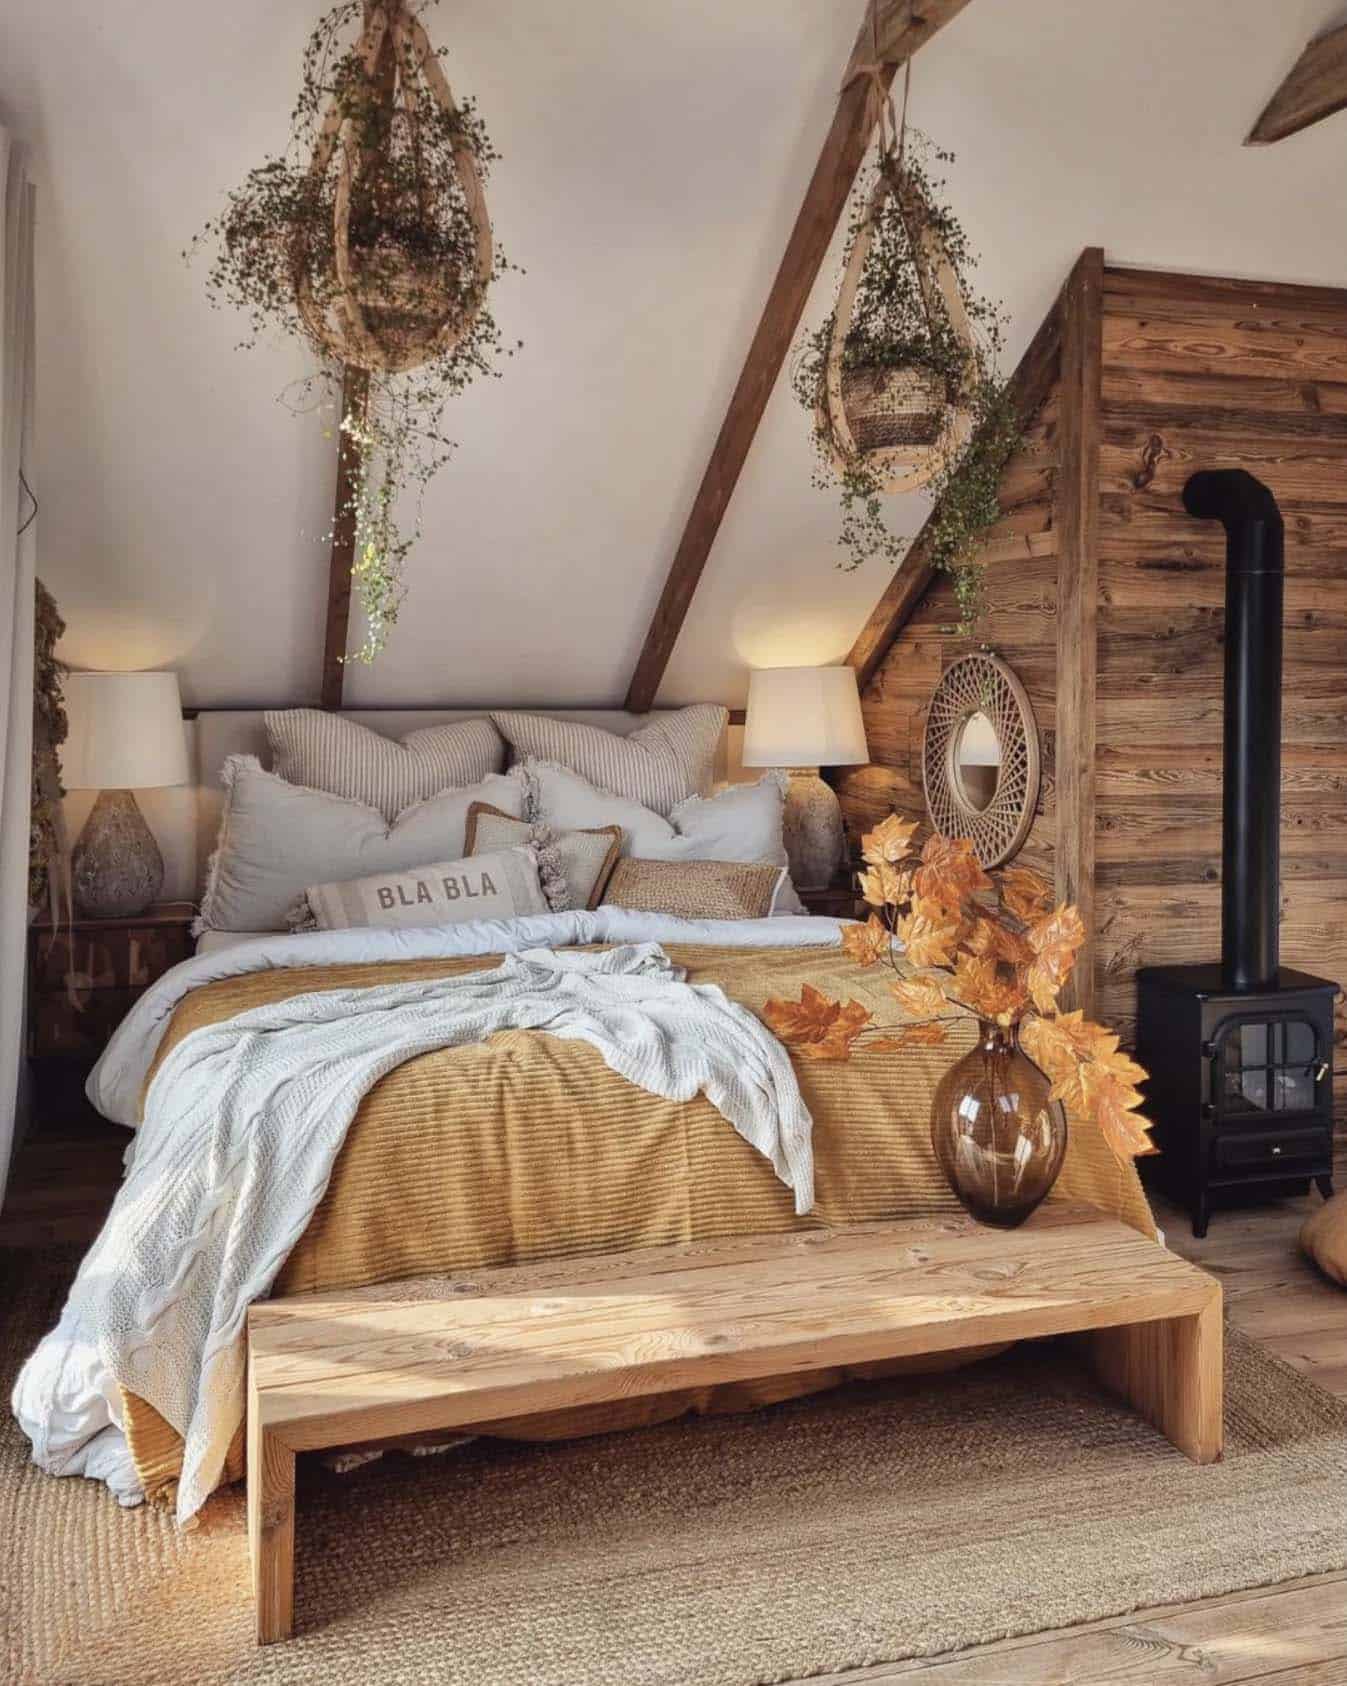 cozy fall bedroom